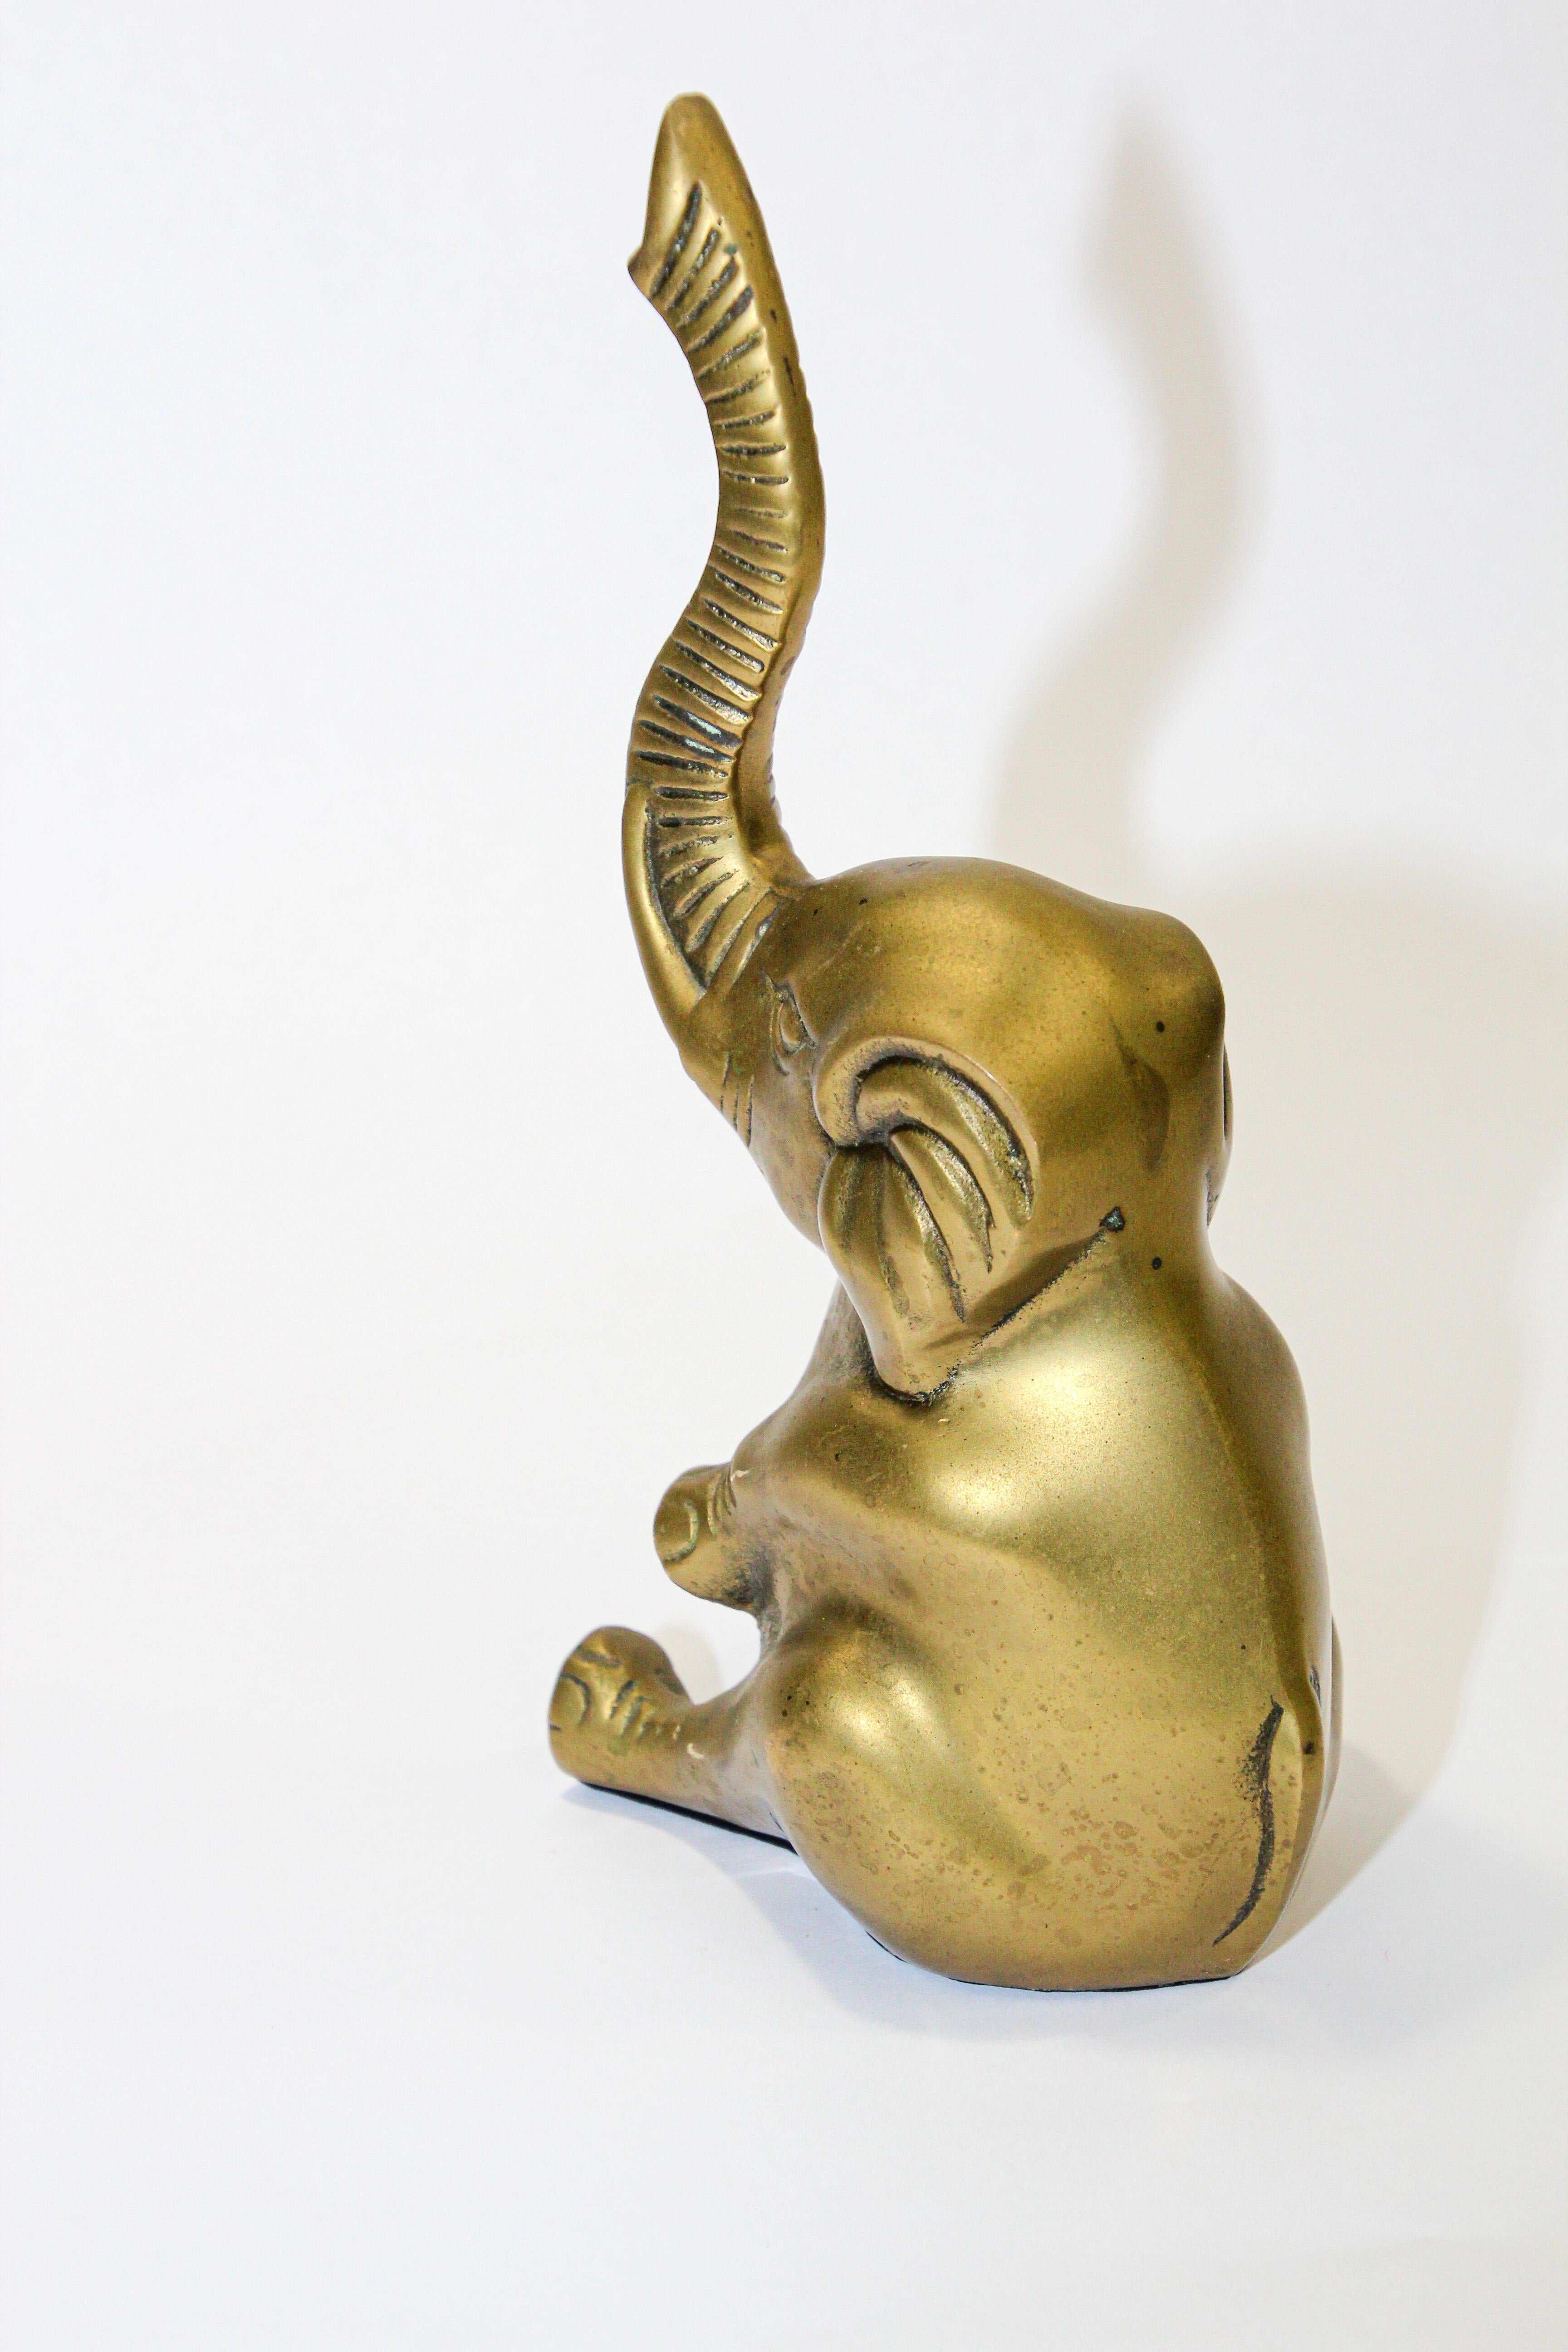 Anglo Raj Vintage Cast Brass Elephant Sculpture Paper Weight